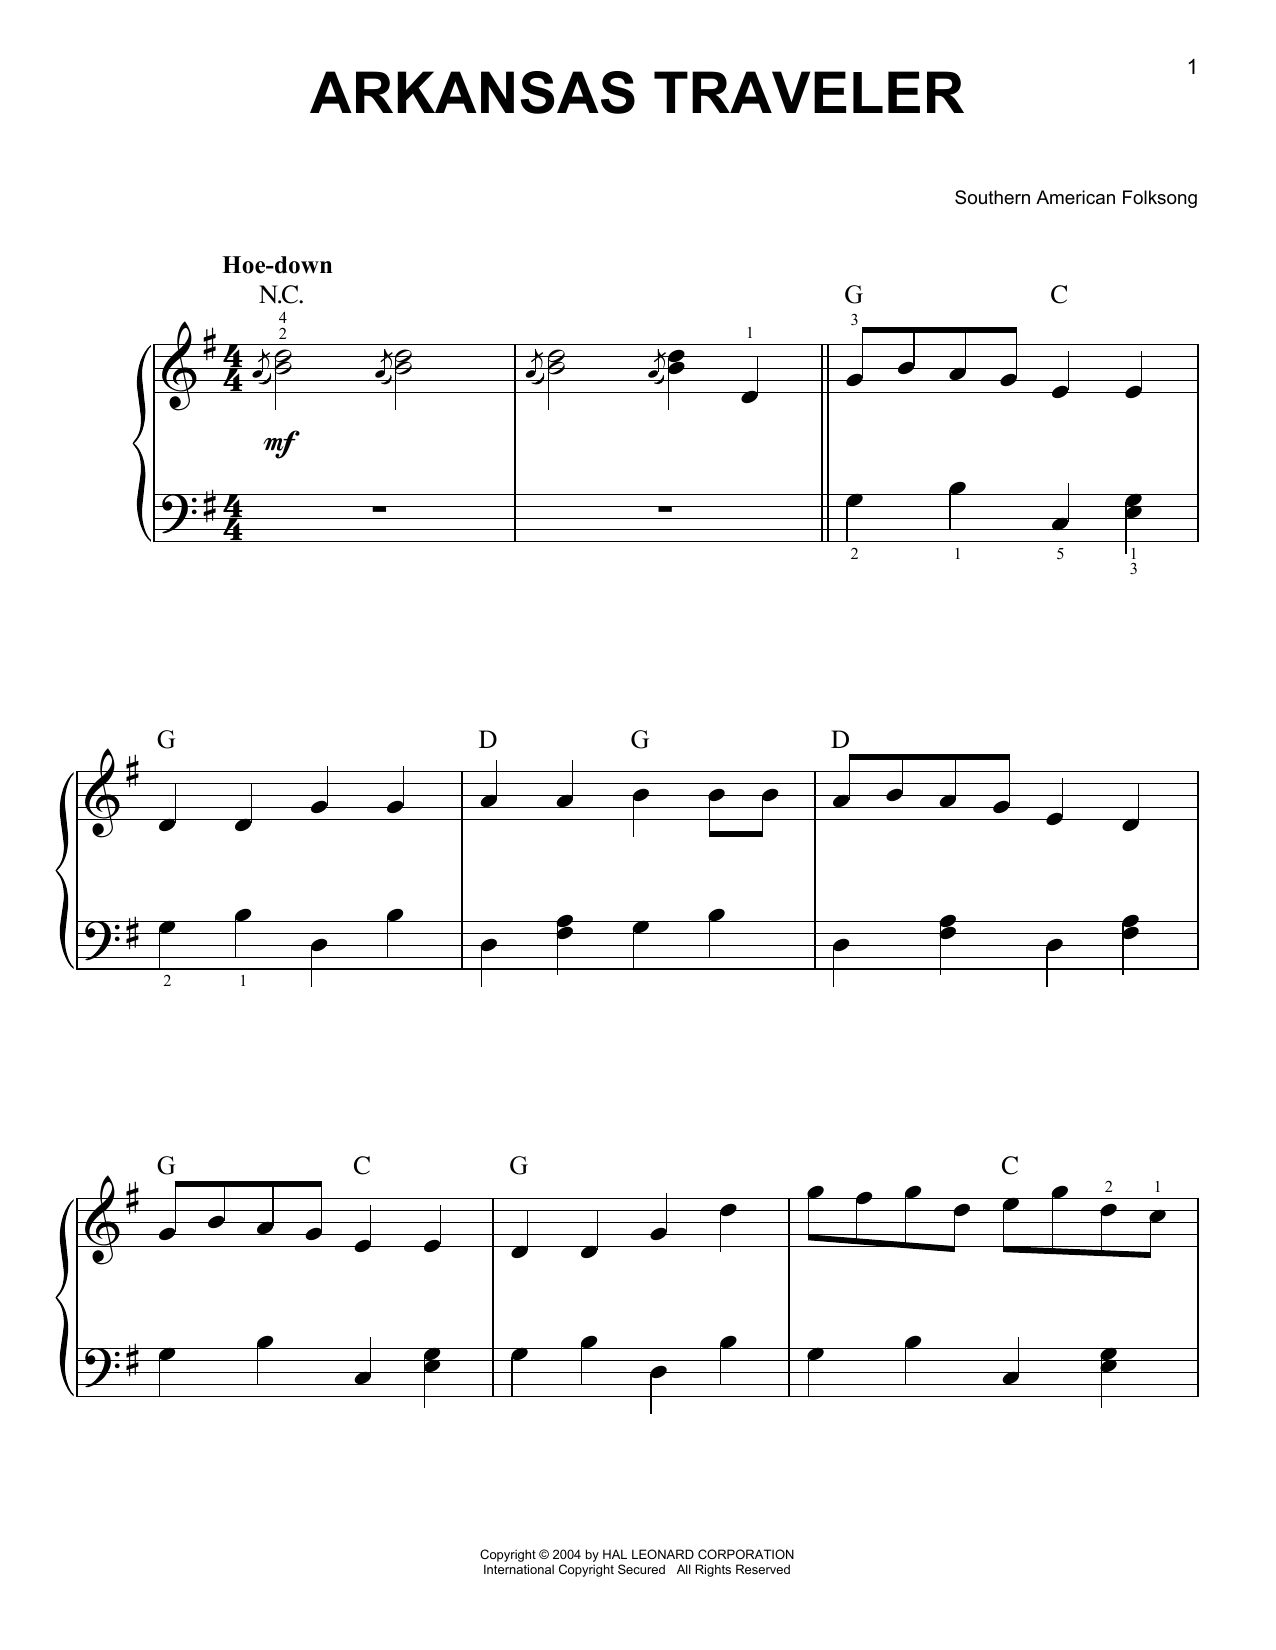 Southern American Folksong Arkansas Traveler Sheet Music Notes & Chords for Melody Line, Lyrics & Chords - Download or Print PDF